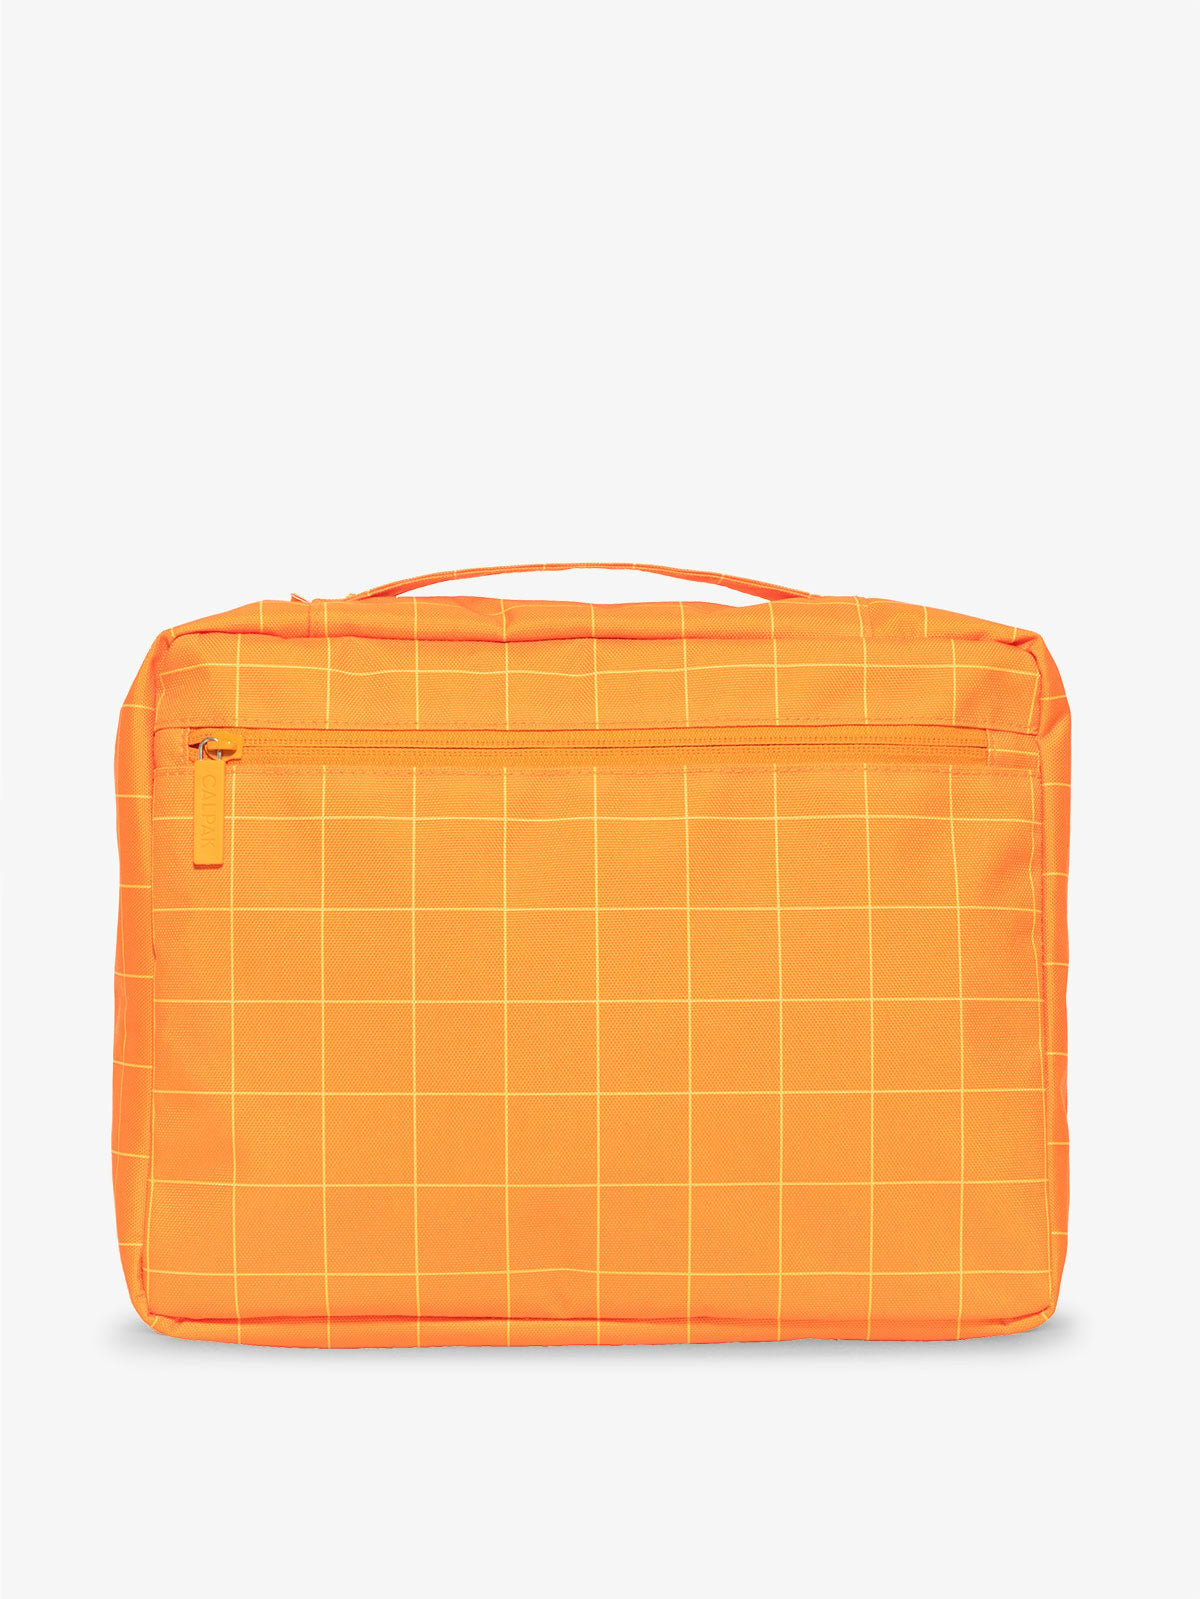 CALPAK zippered mesh organizers with top handle in orange grid